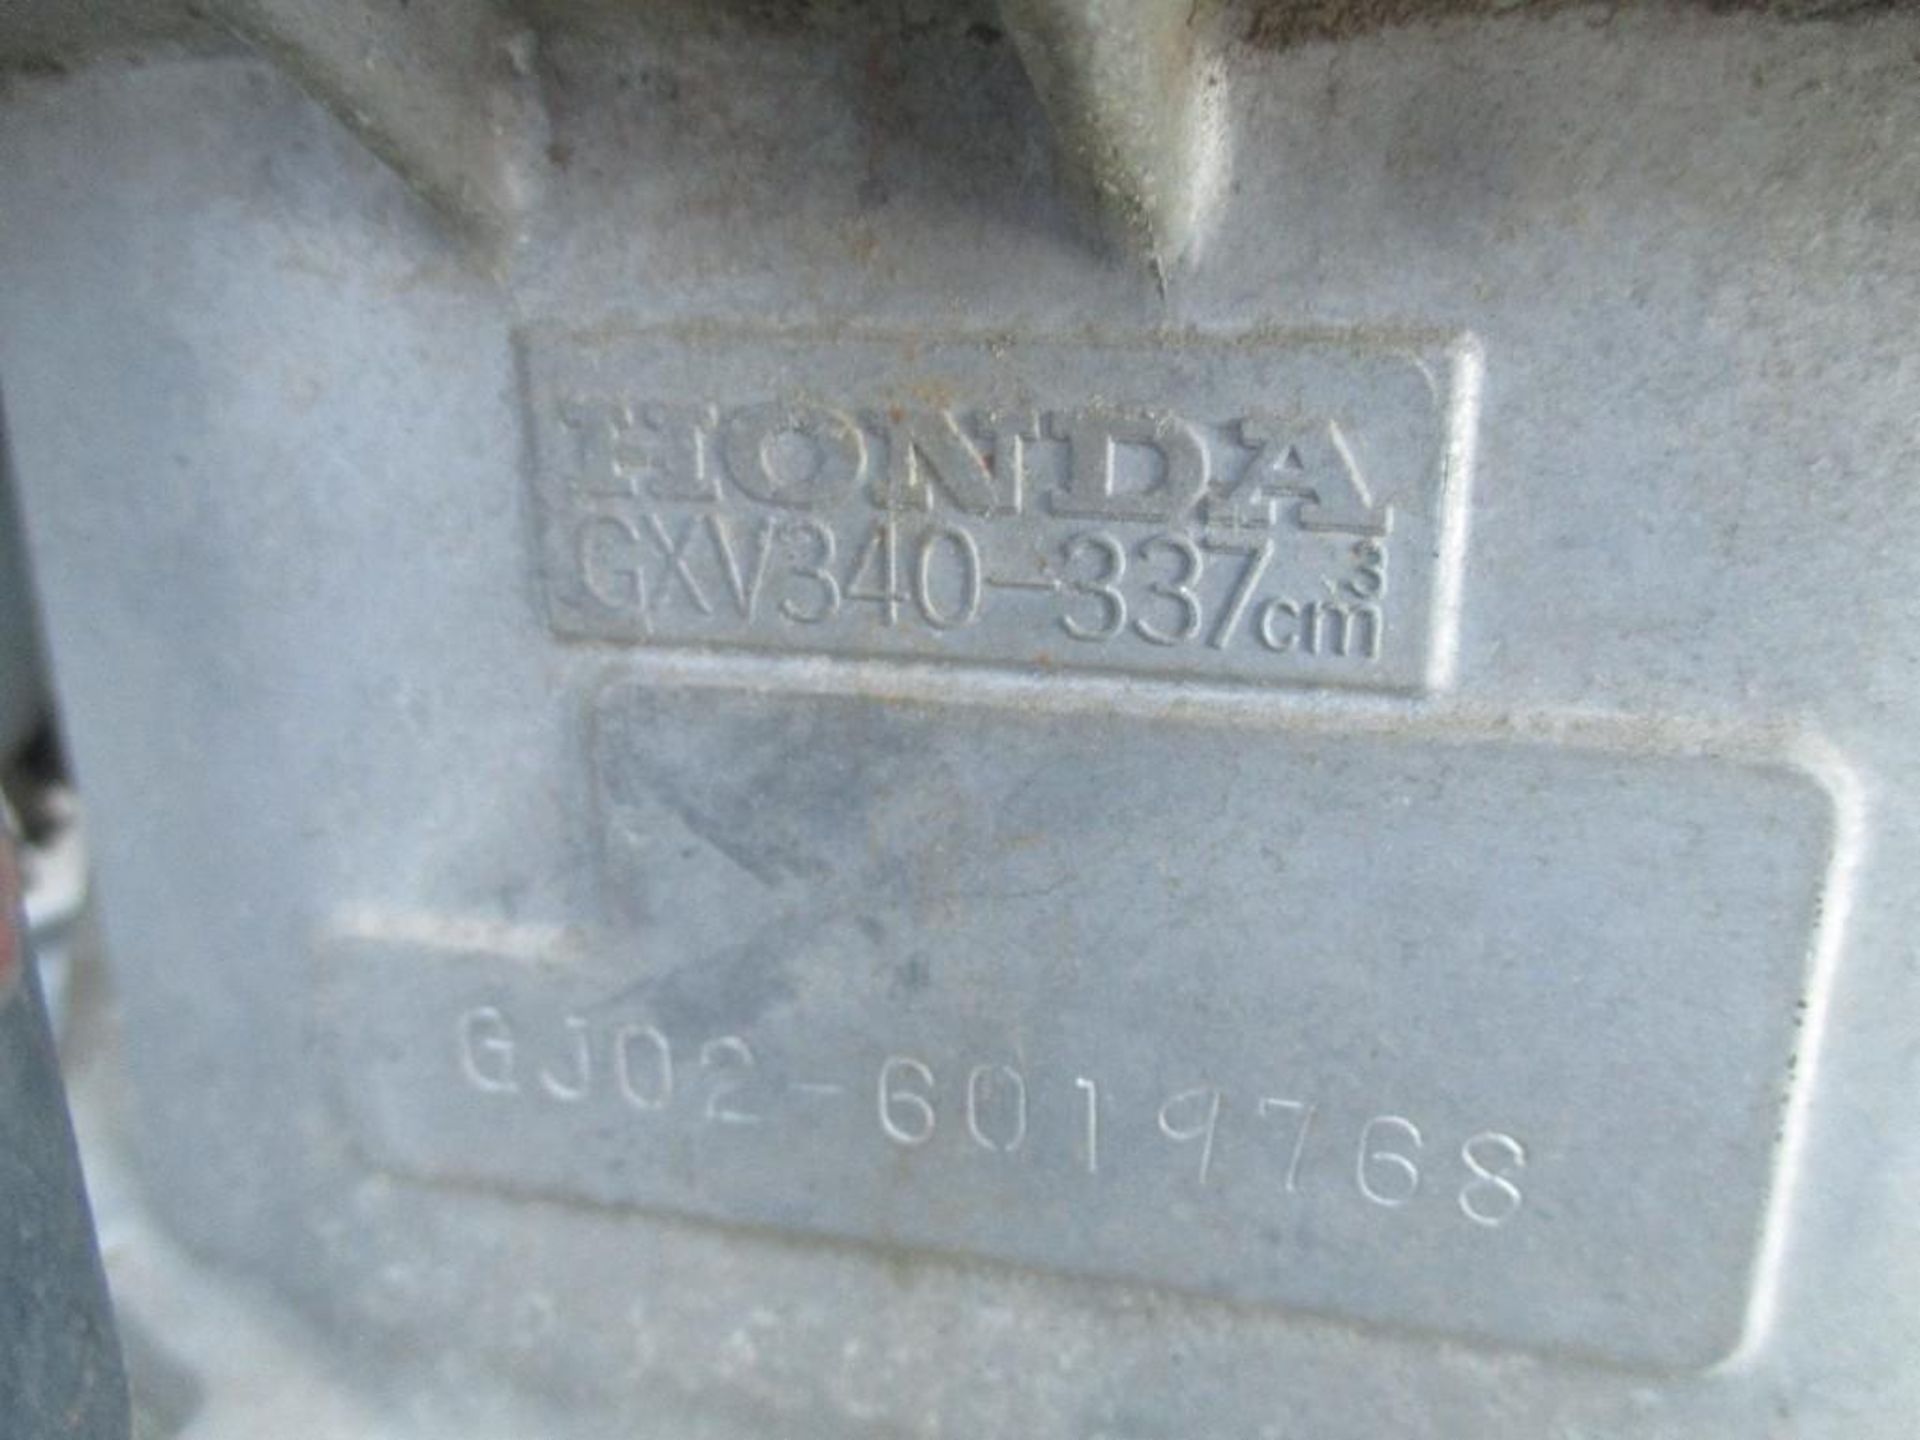 Honda  GXV340-337 cm GJ02-6019768 - Image 10 of 10